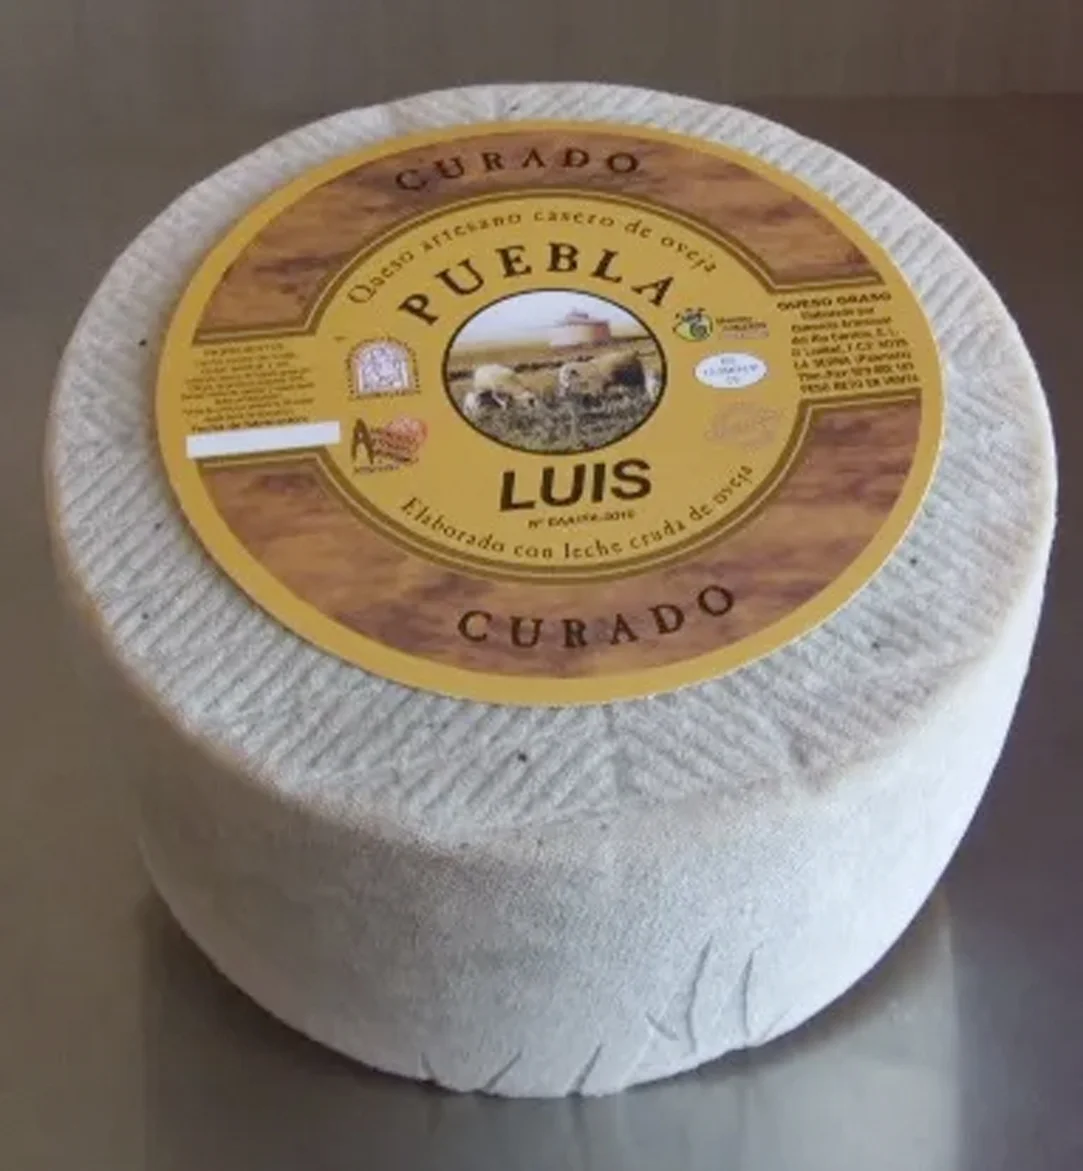 Queseria Artesana del Rio Carrion queso curado.webp